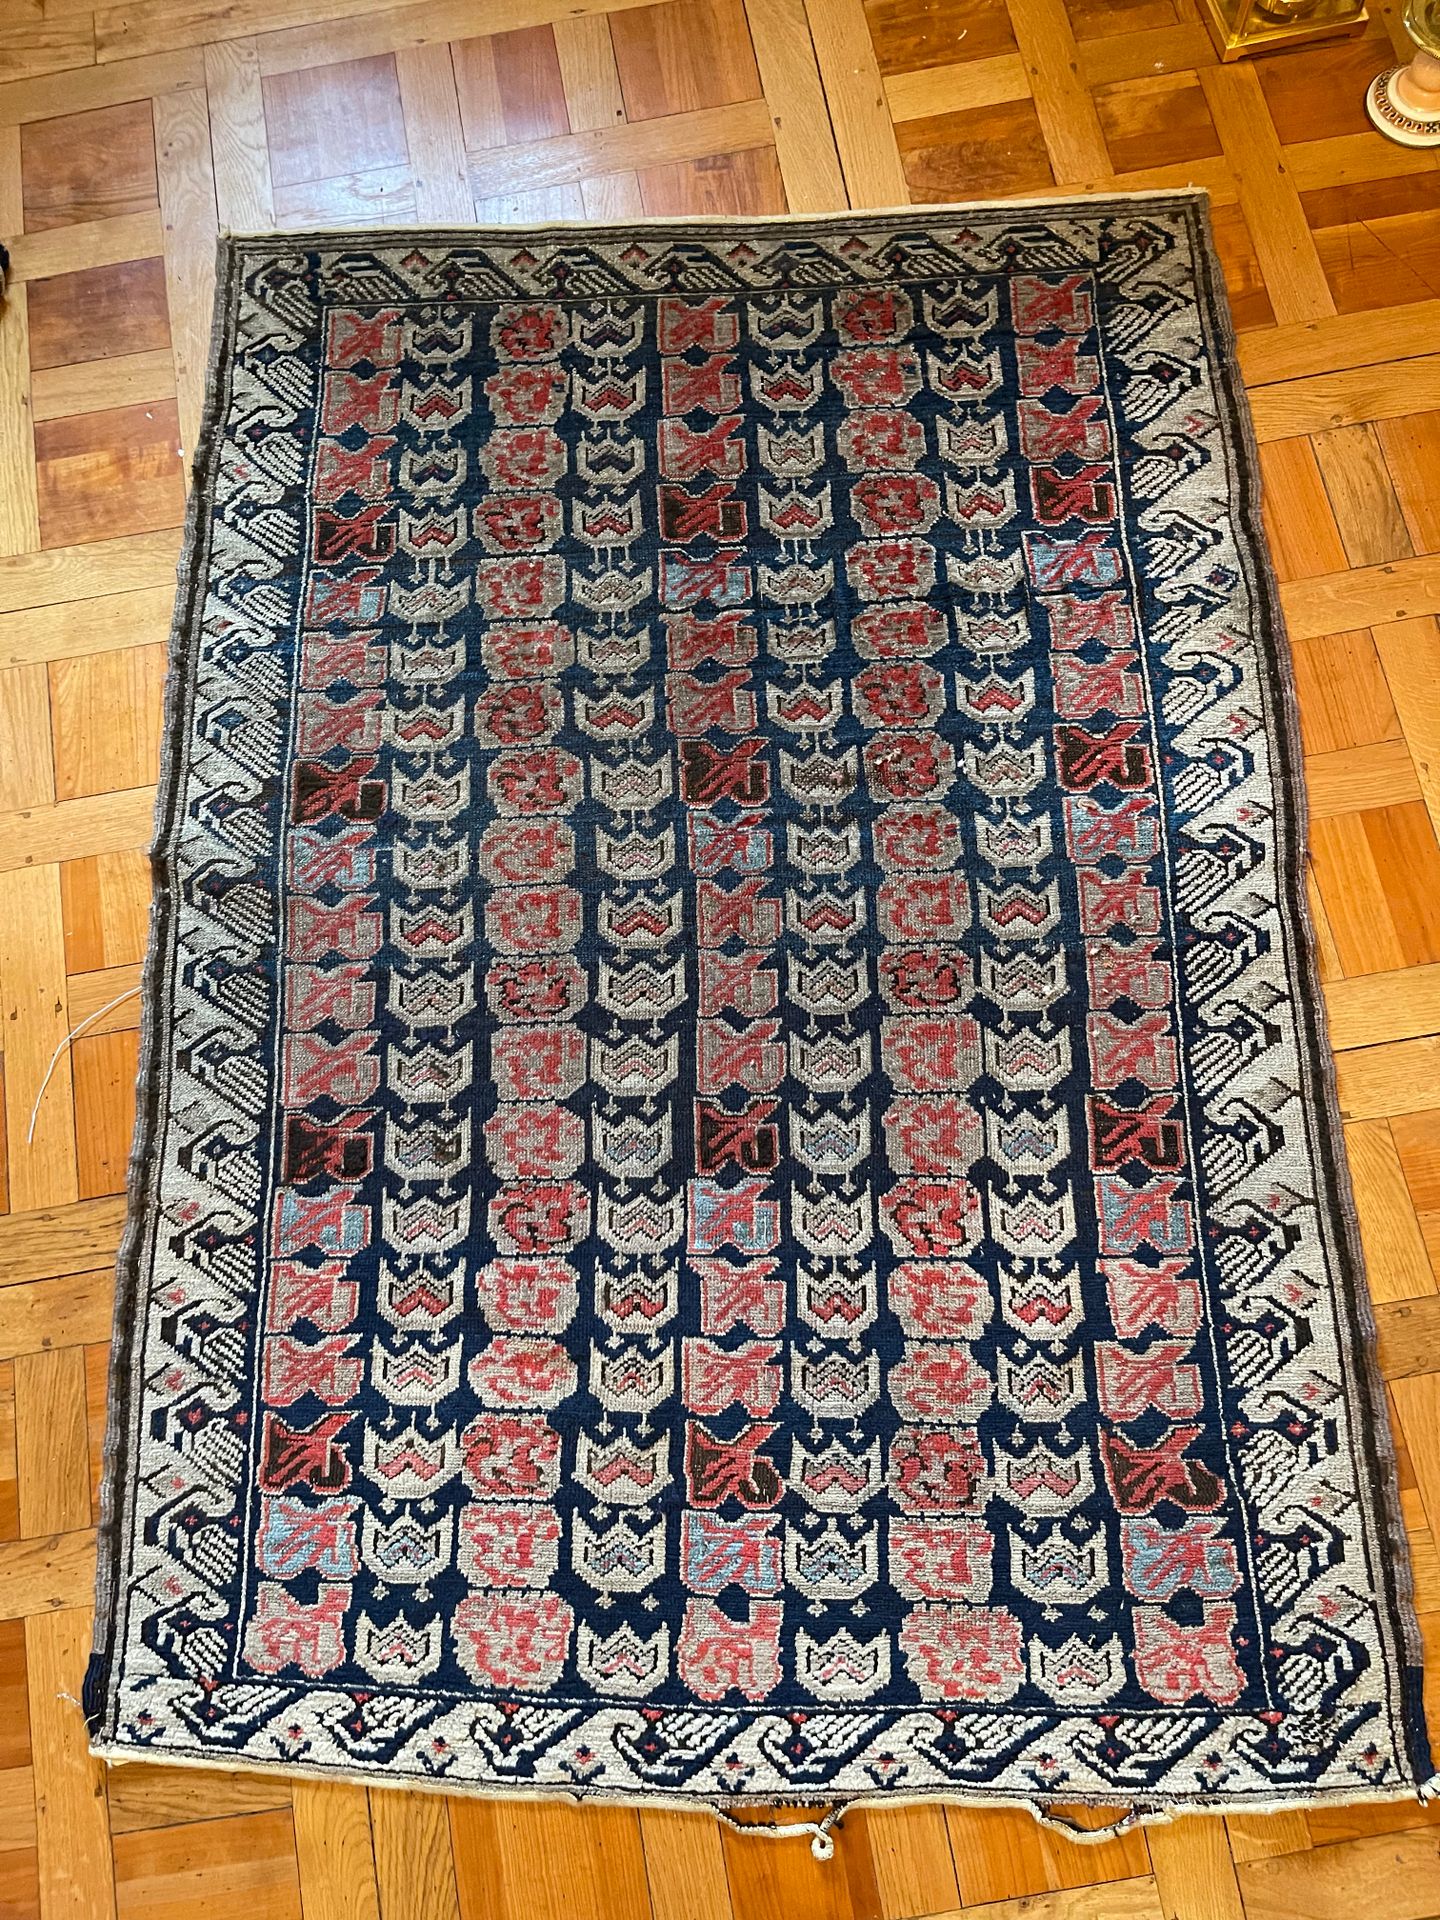 Null 东方羊毛地毯，在午夜蓝色背景上装饰有红色和白色的几何图案（磨损）。170 x 123 cm